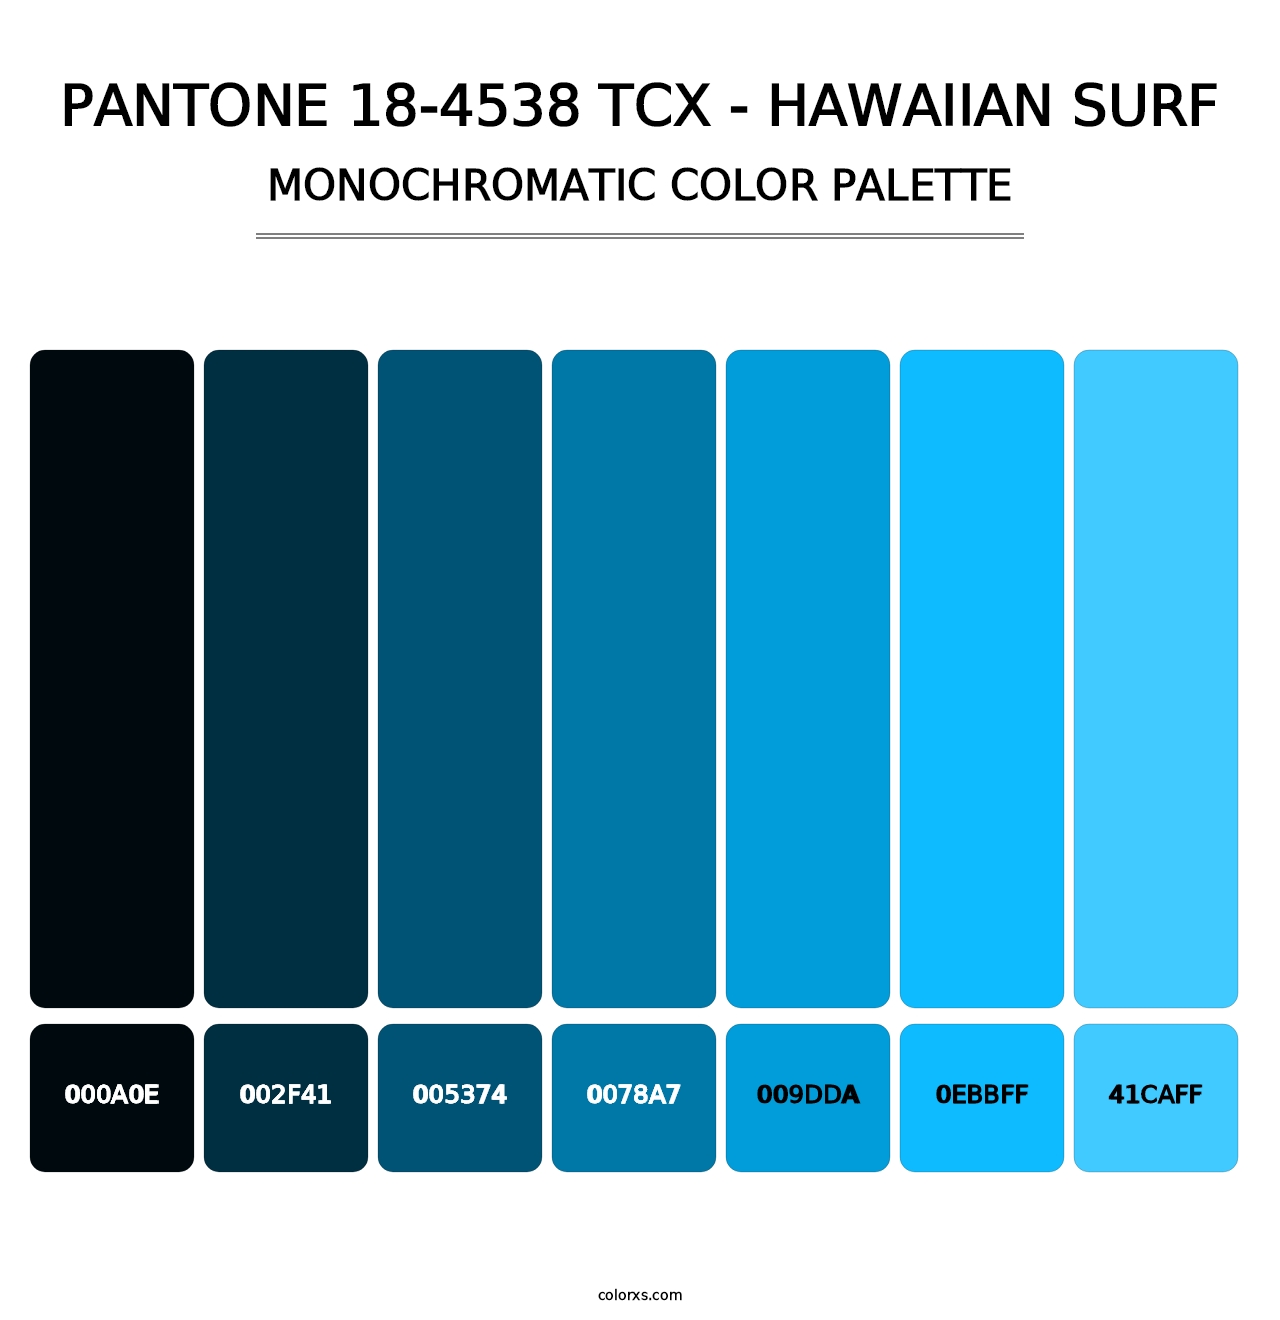 PANTONE 18-4538 TCX - Hawaiian Surf - Monochromatic Color Palette